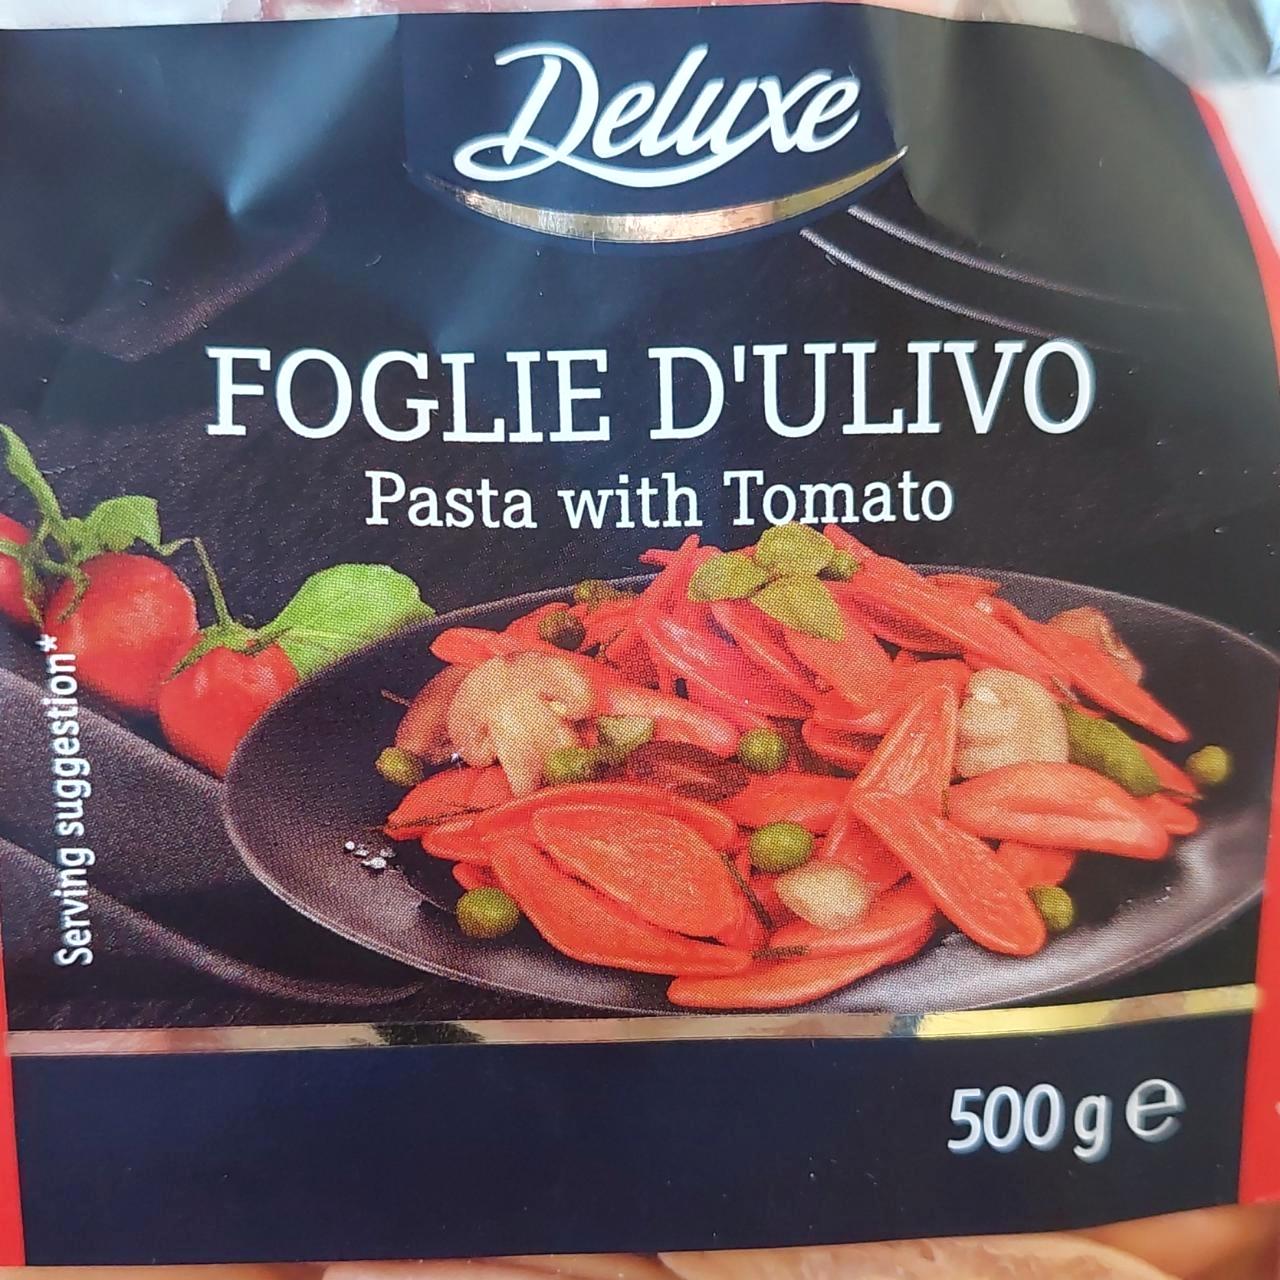 Képek - Foglie d'ulivo Pasta with Tomato Deluxe